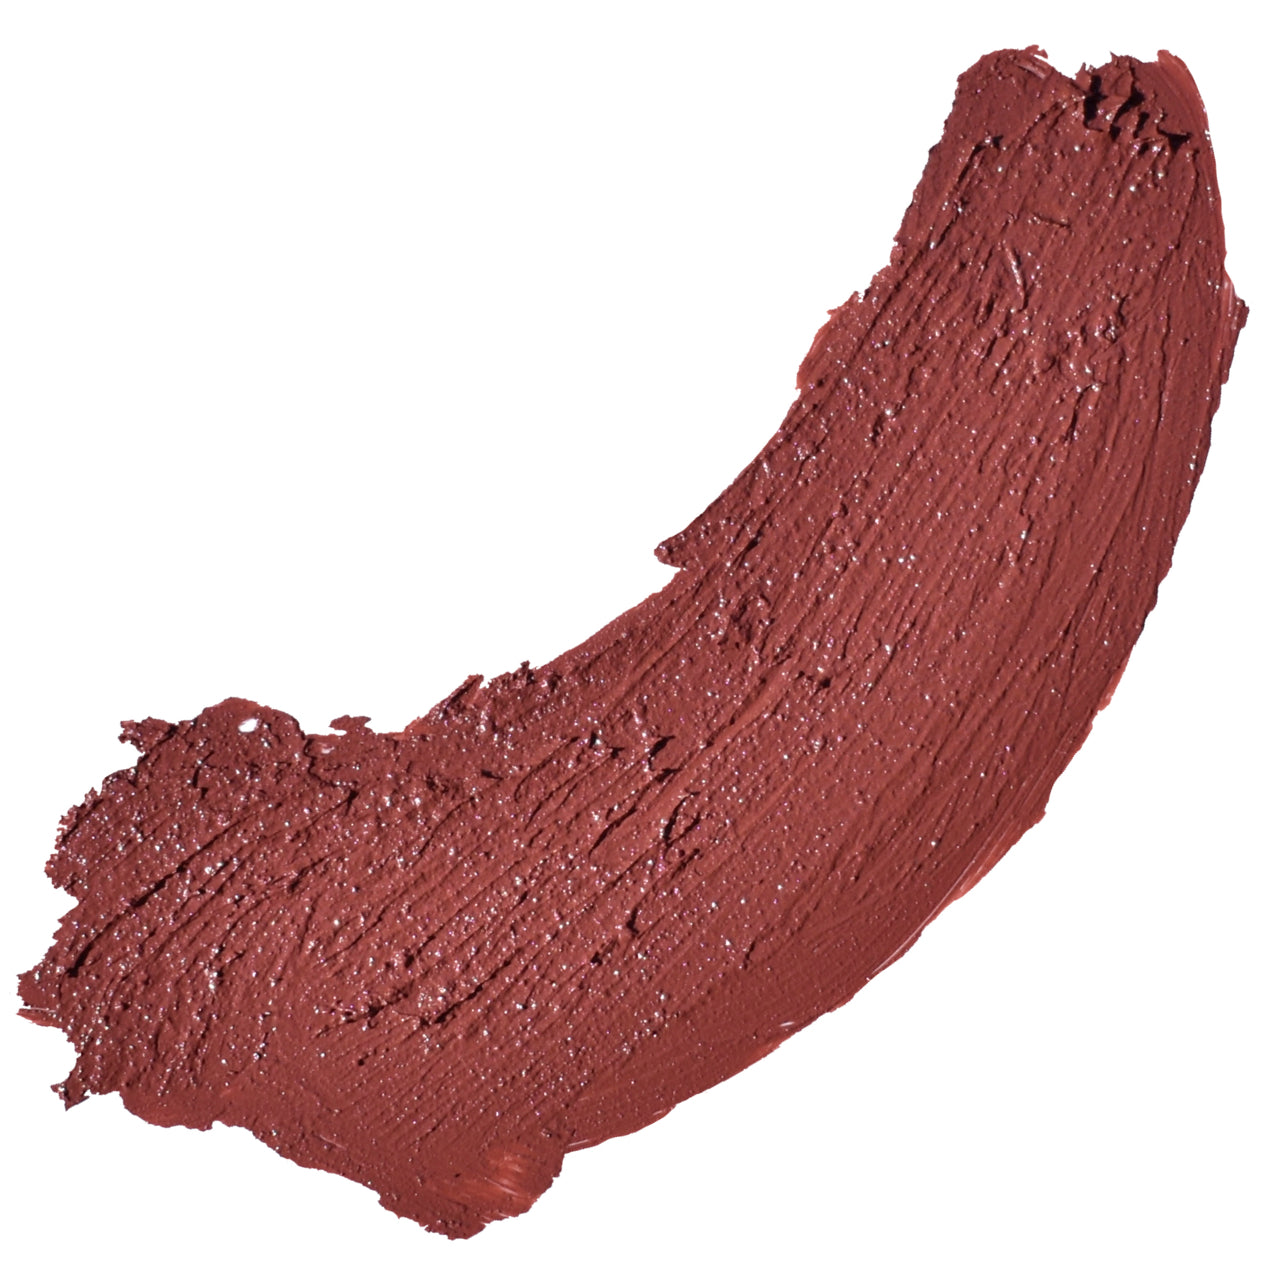 Cordovan - Rich Red Brown Organic Lipstick swatch on white background